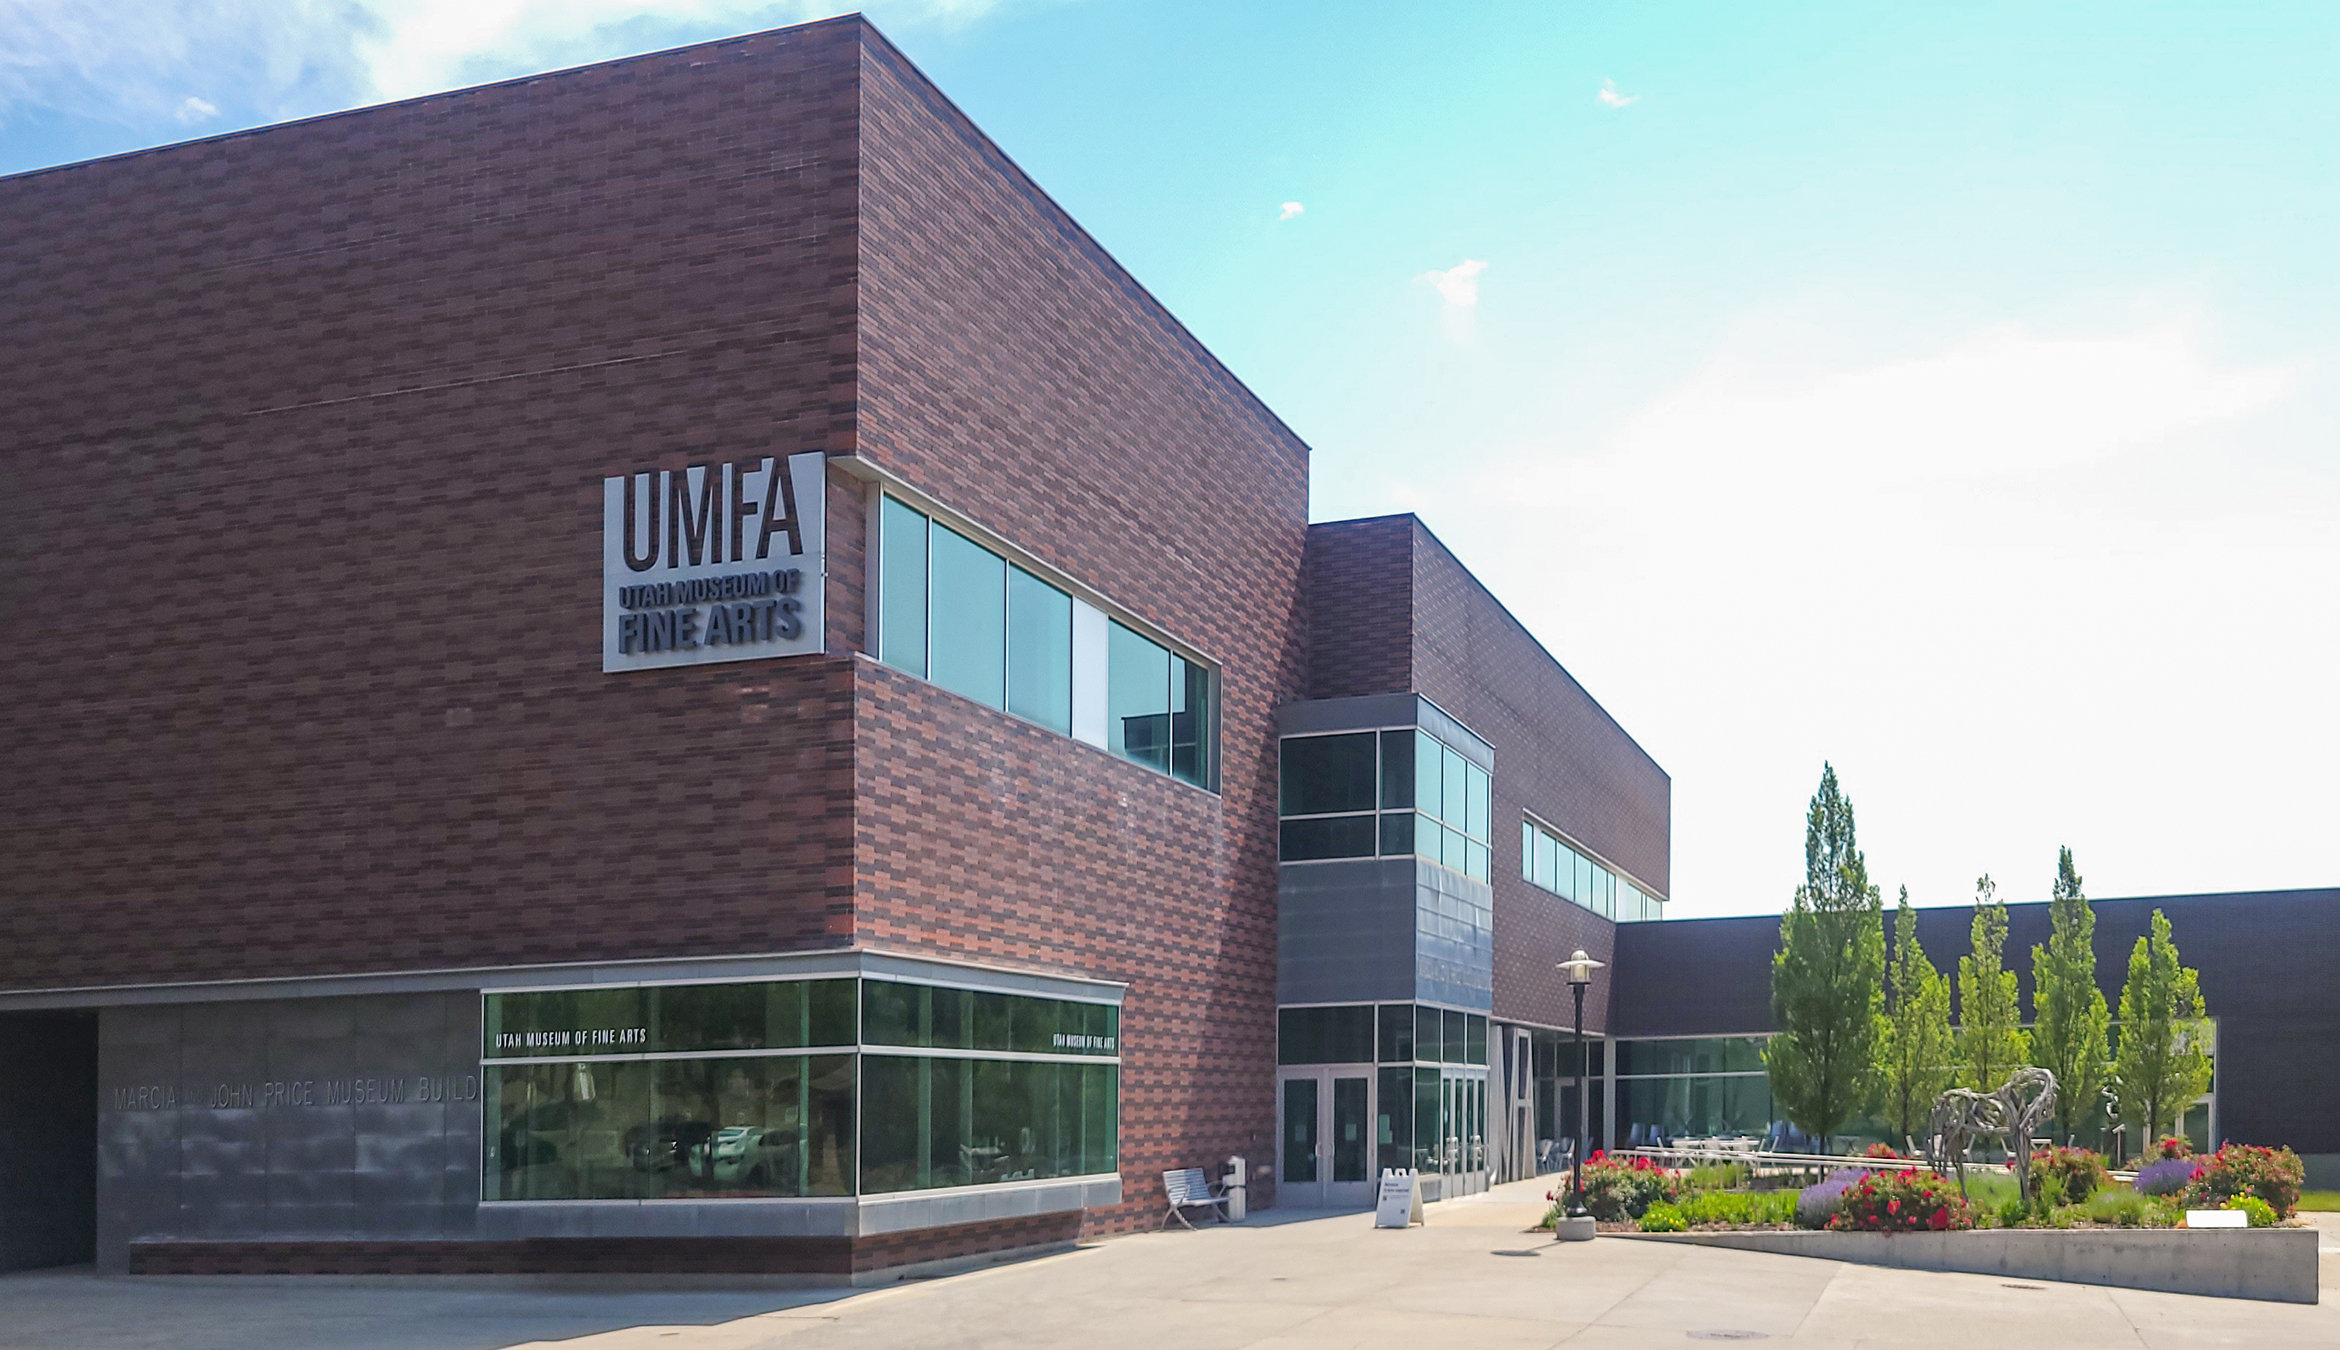 UMFA  The Utah Museum of Fine Arts